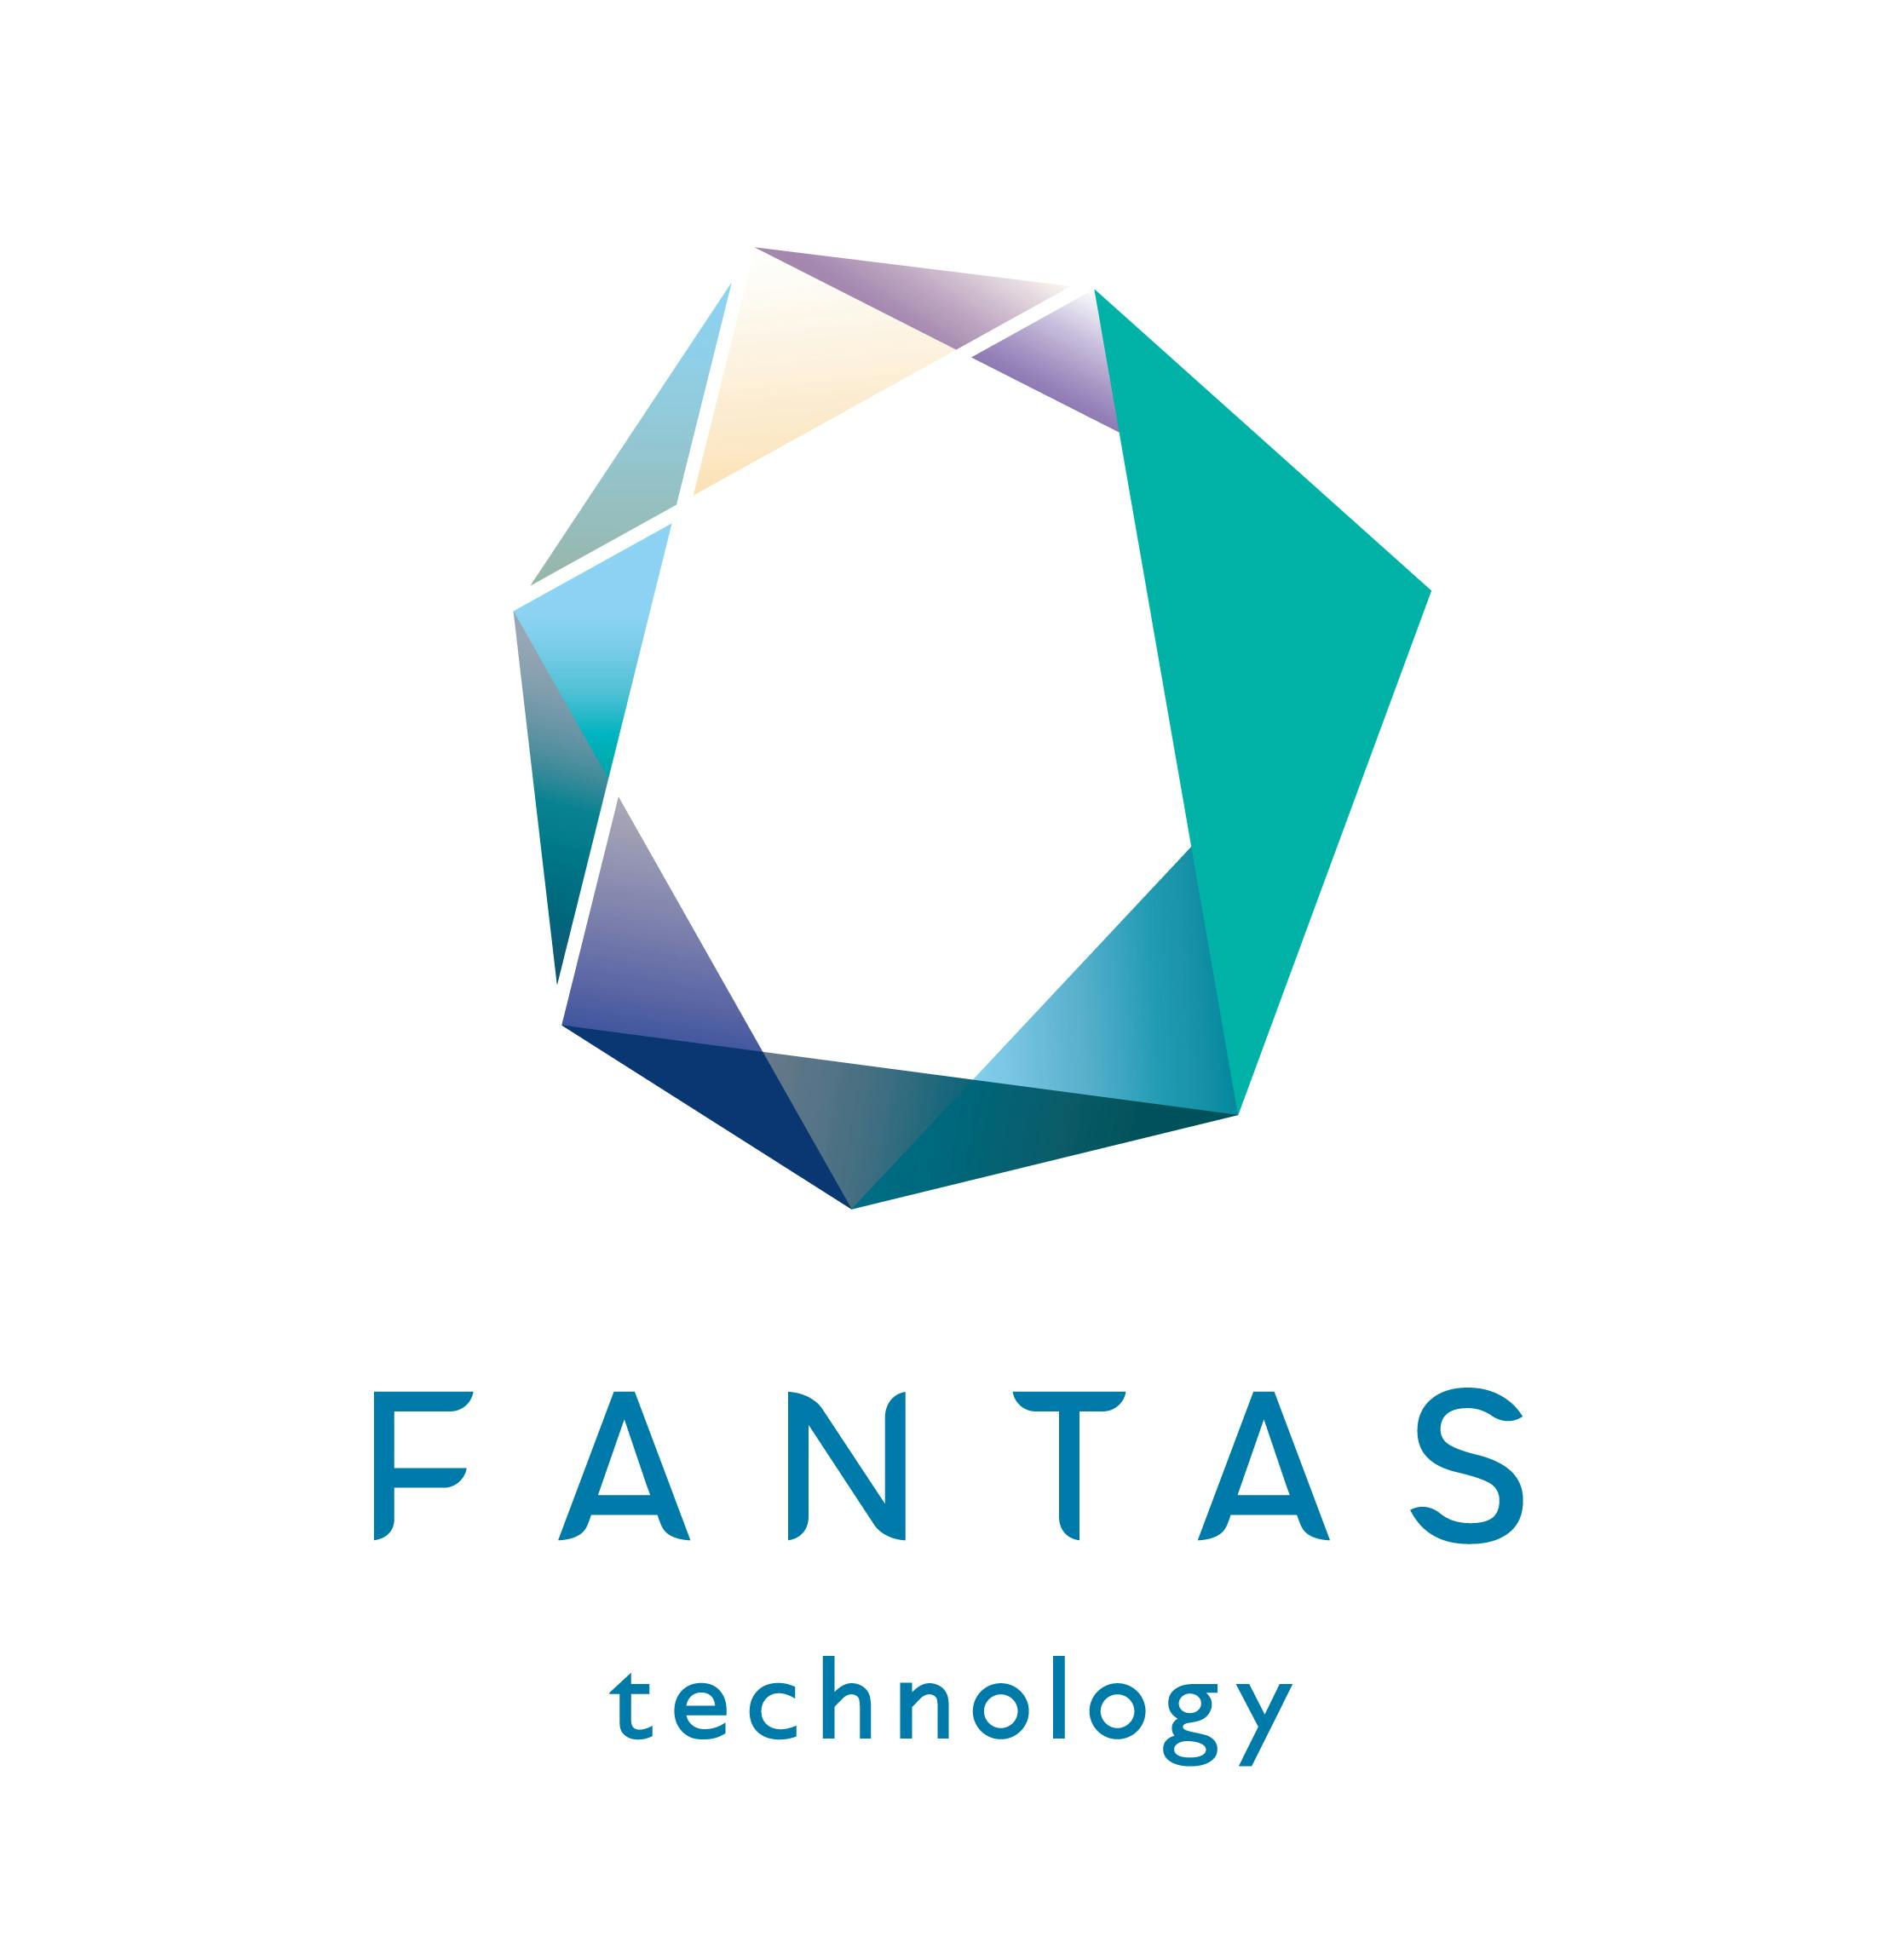 FANTAS technology